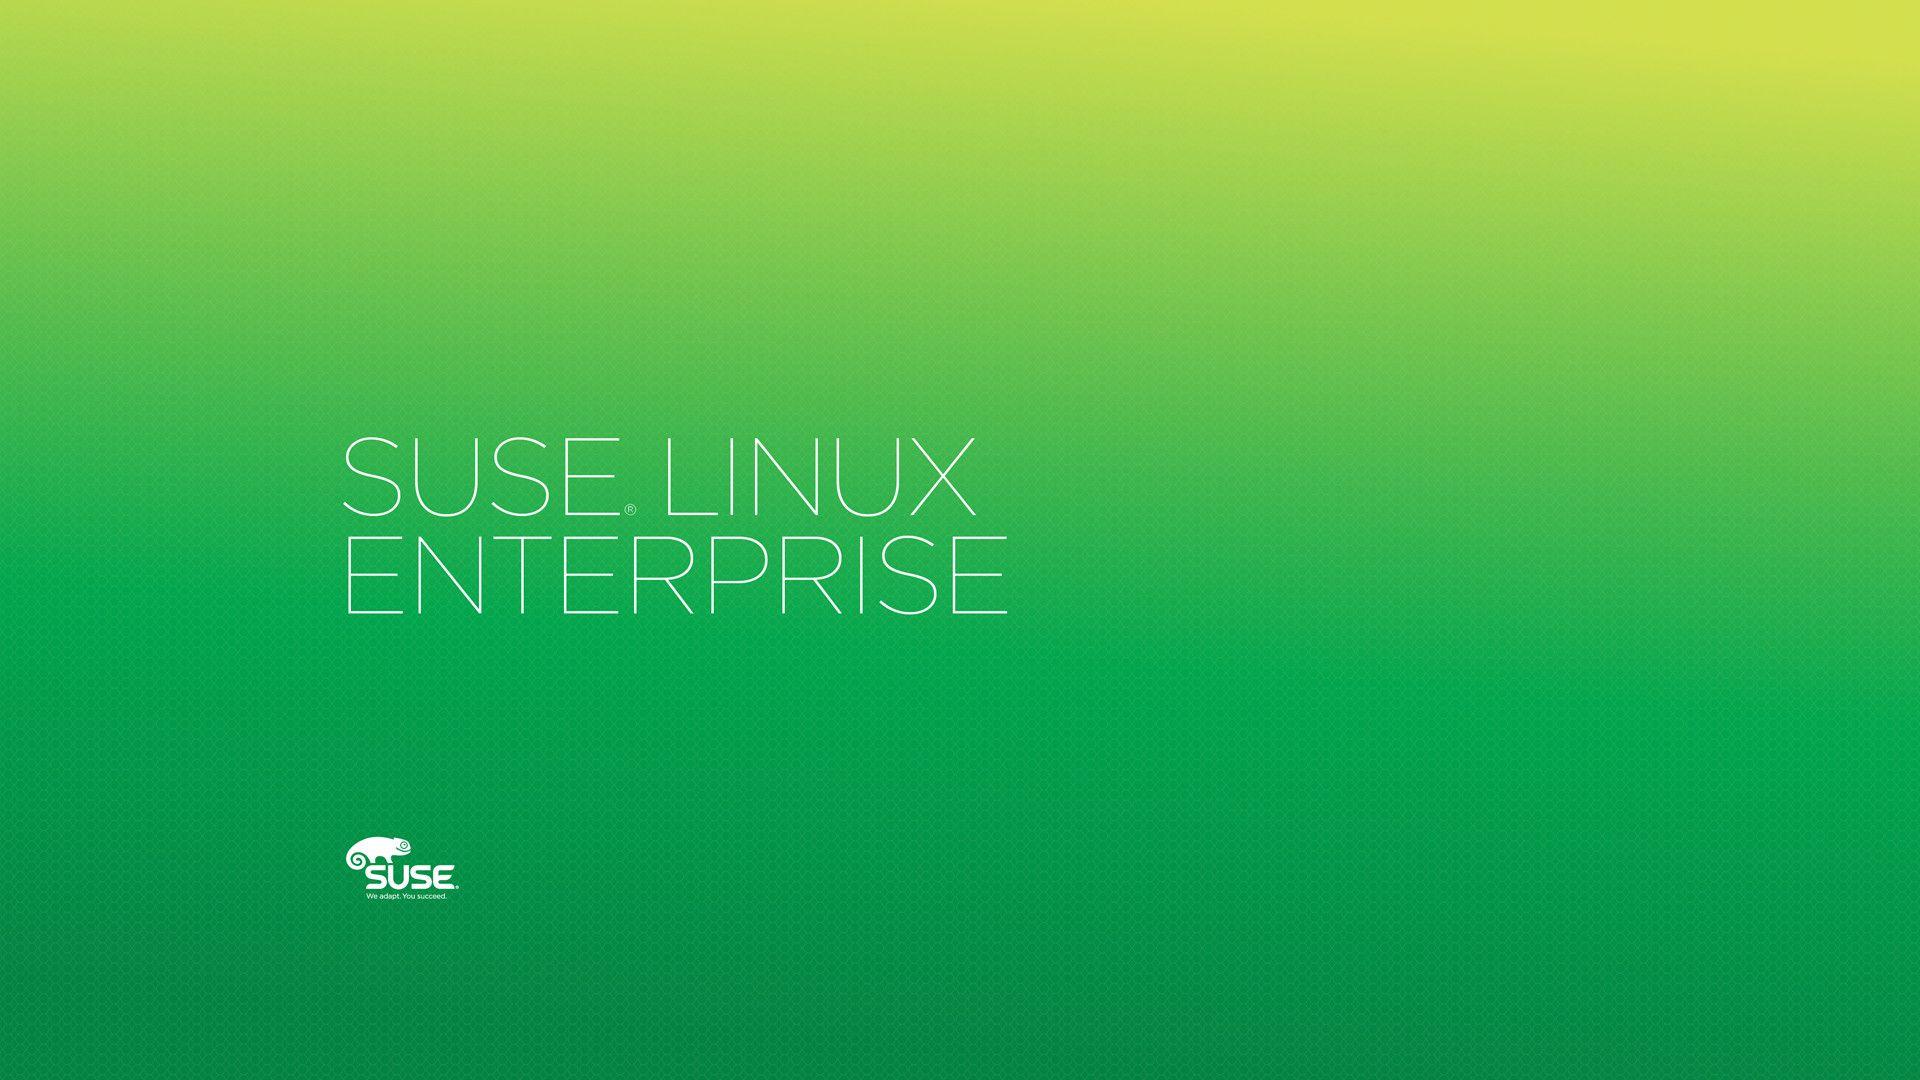 suse enterprise desktop